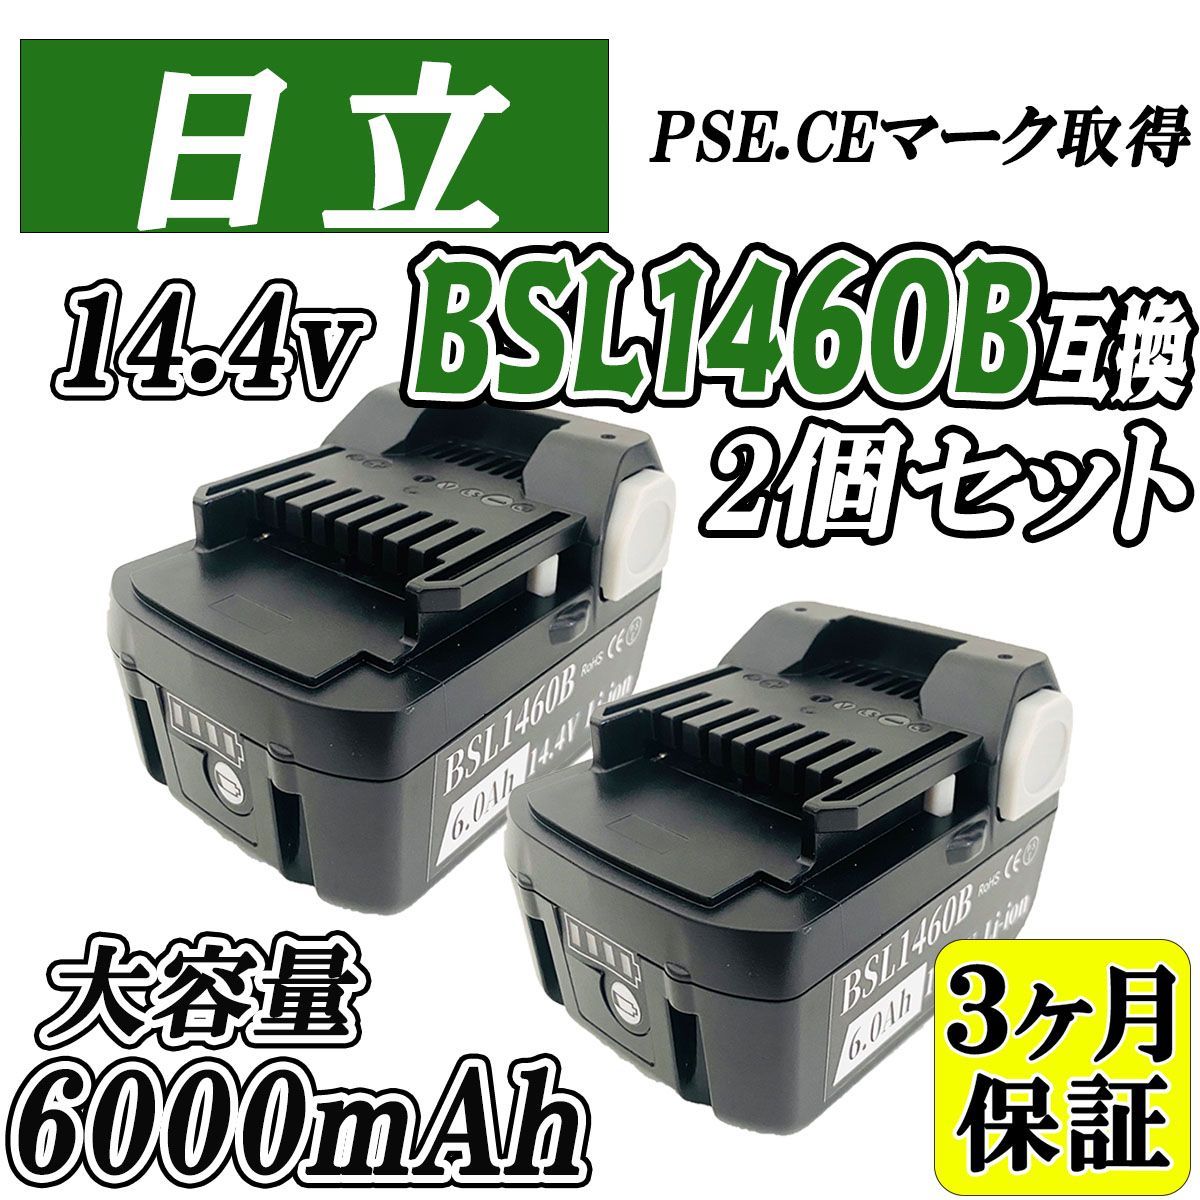 BSL1460B hikoki 2個セット ハイコーキ 日立 BSL1460B ハイグレード高品質セル搭載 互換バッテリー 残量表示付き 14.4V 6000mAh  リチウムイオン電池 電動工具用 for Hitachi 329083 329877 329901 BSL1415 BSL1430 BSL1450  BSL1460対応 Li-ion 新品 送料無料 - DIY・工具